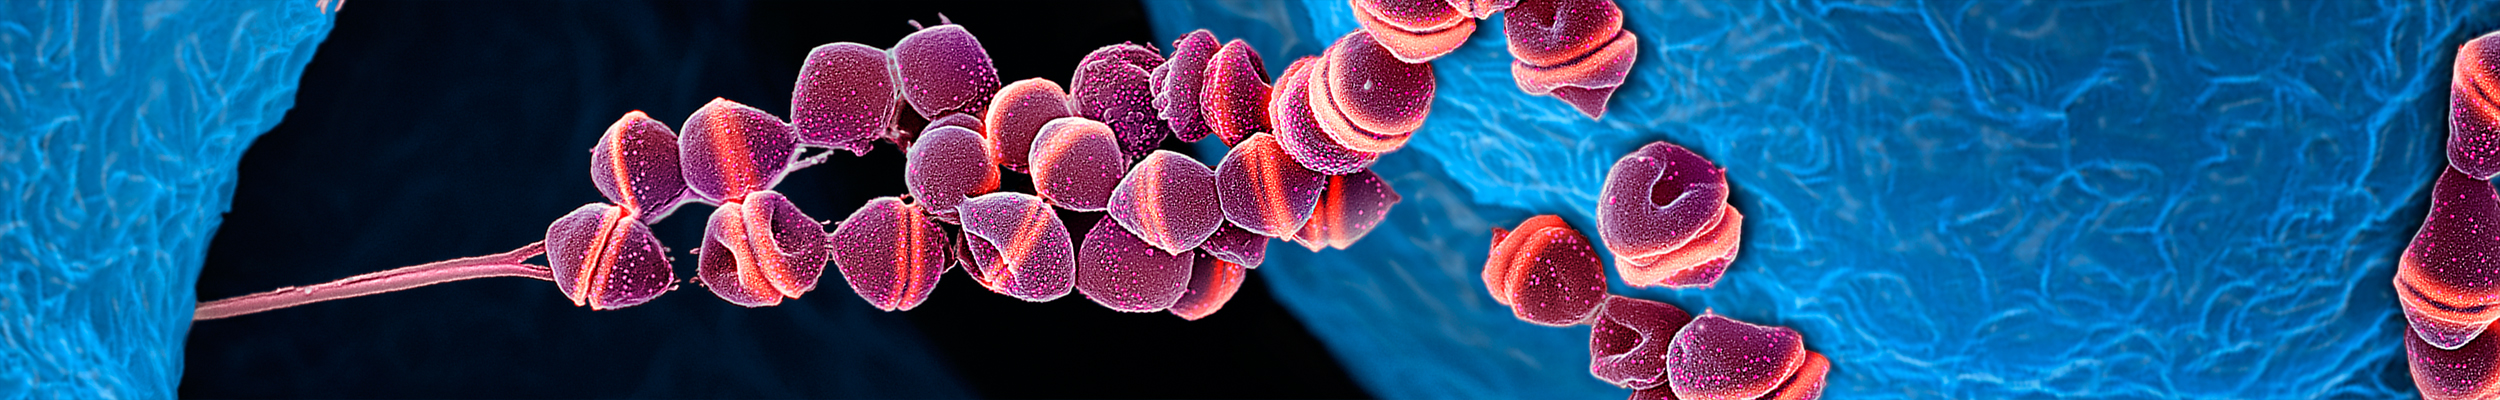 Immunität-Micronaut Bacteria Streptococcus 005a029 horizontal2